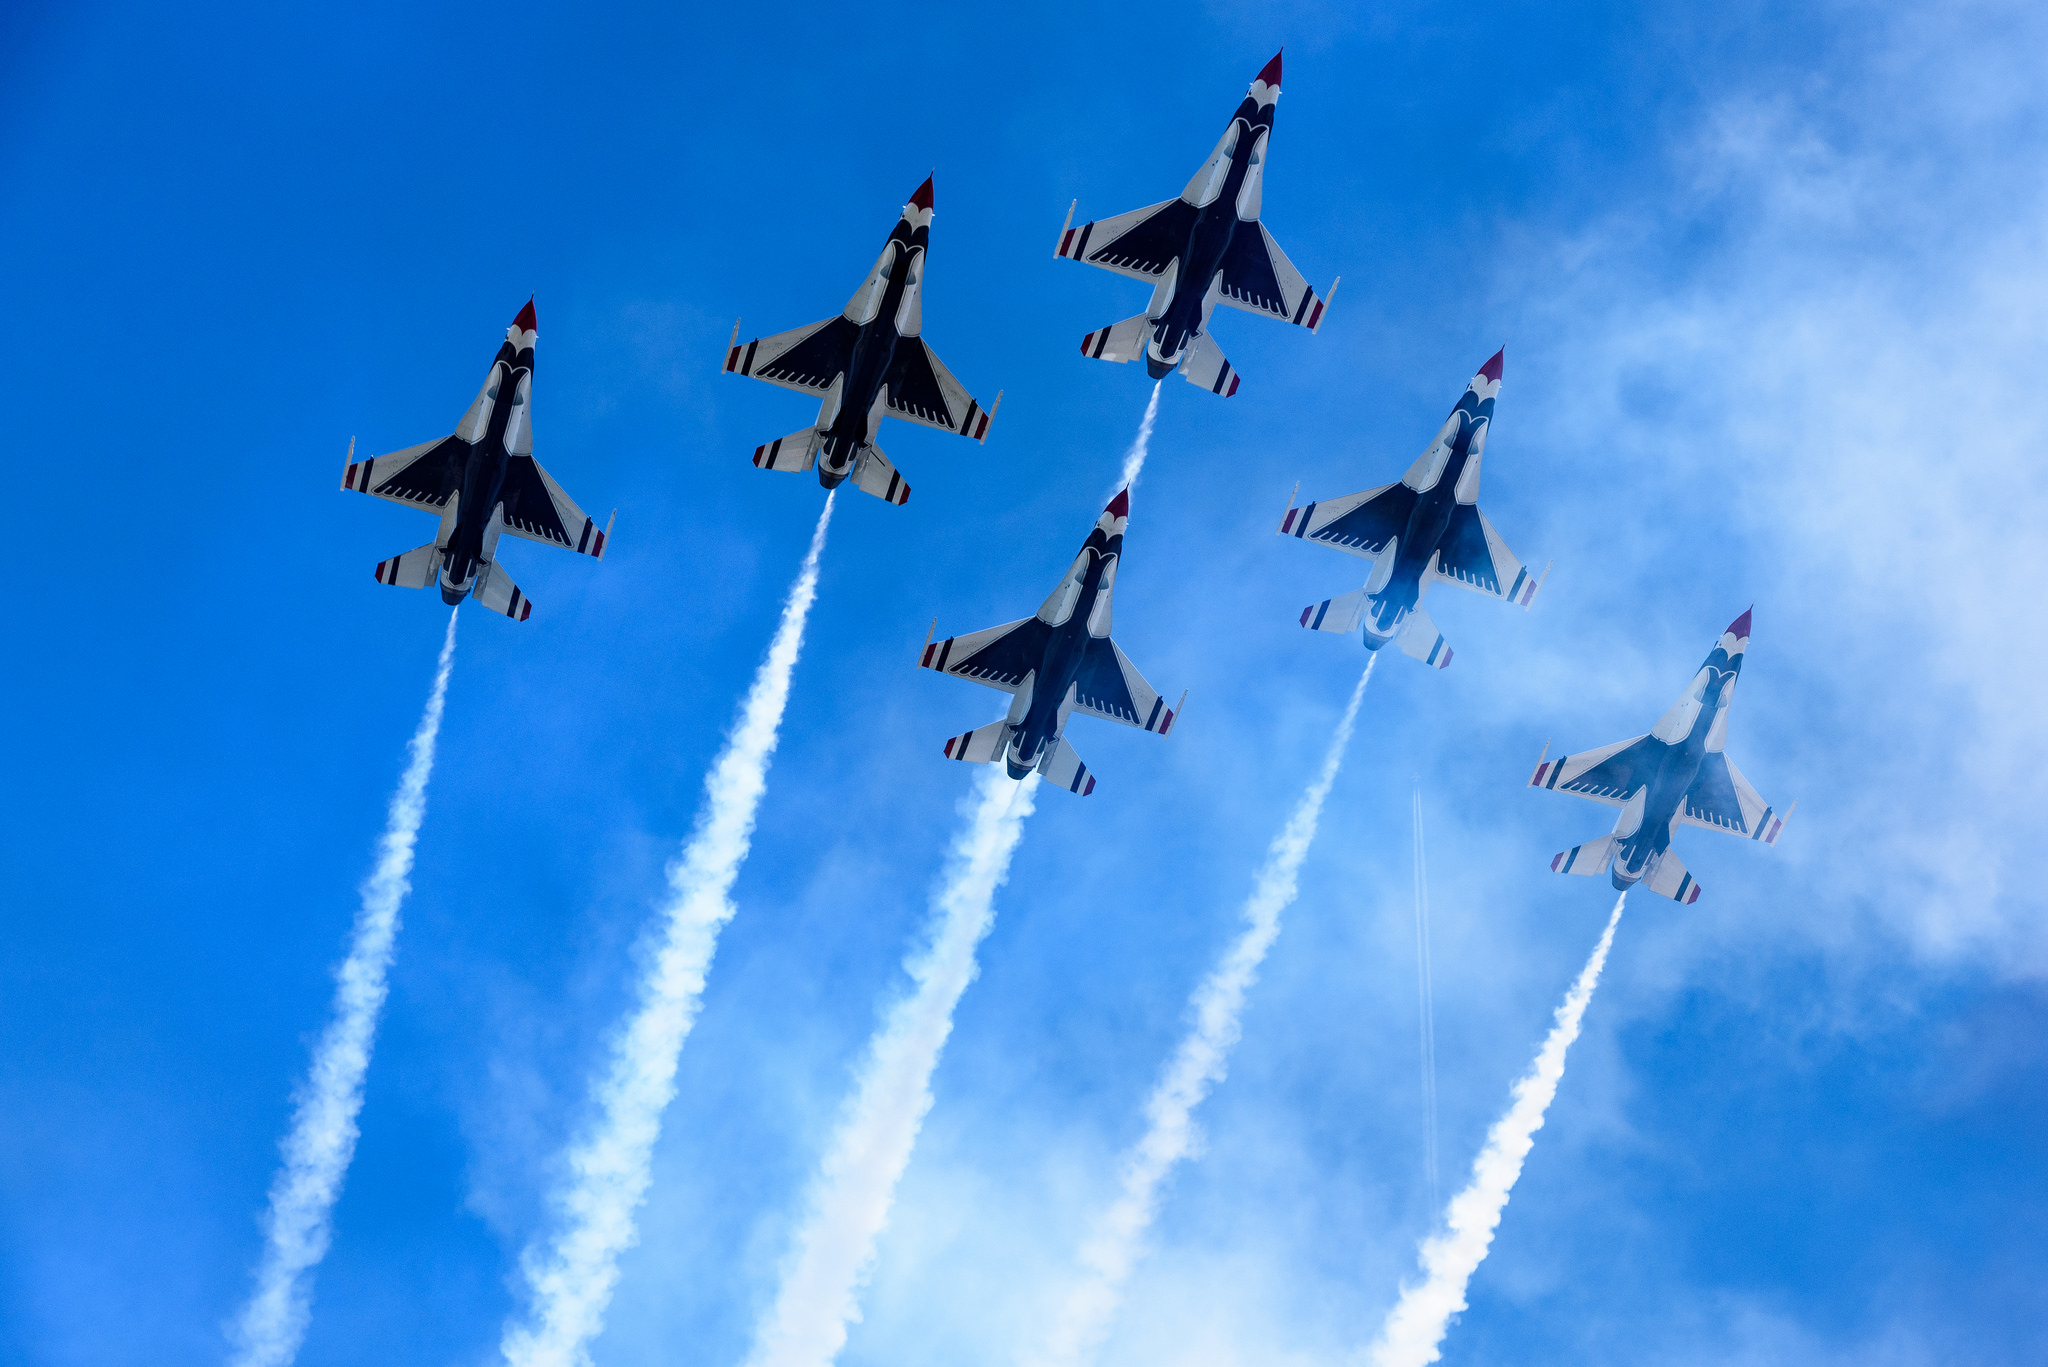 US Air Force Thunderbirds in France by Joe deSousa